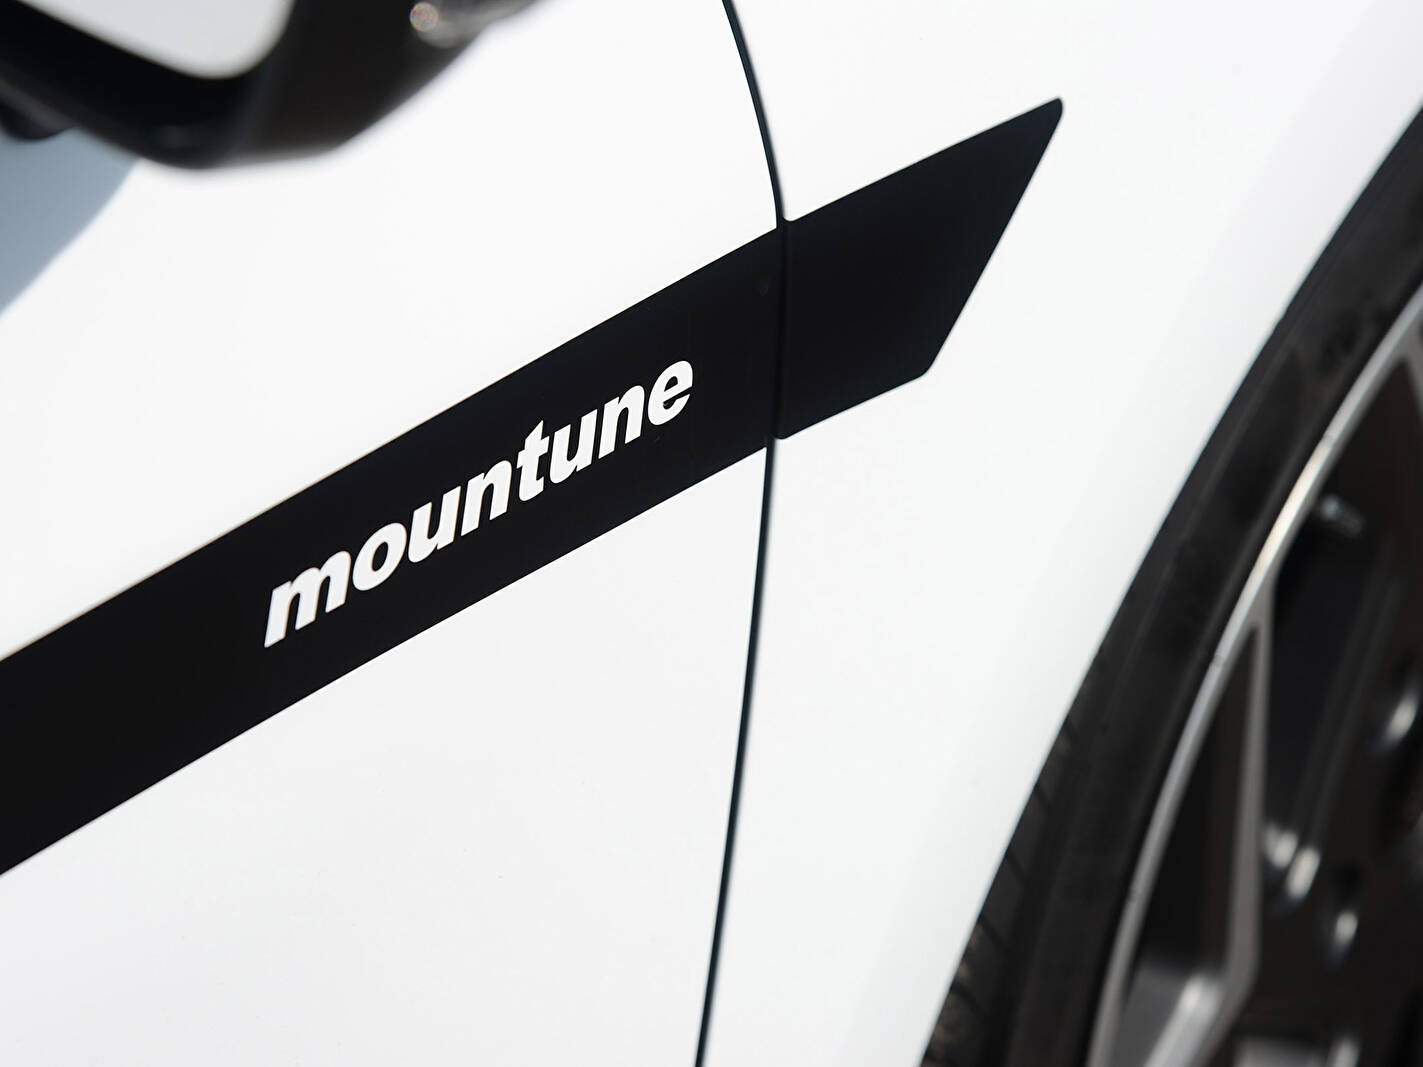 Mountune Fiesta ST (2019),  ajouté par fox58